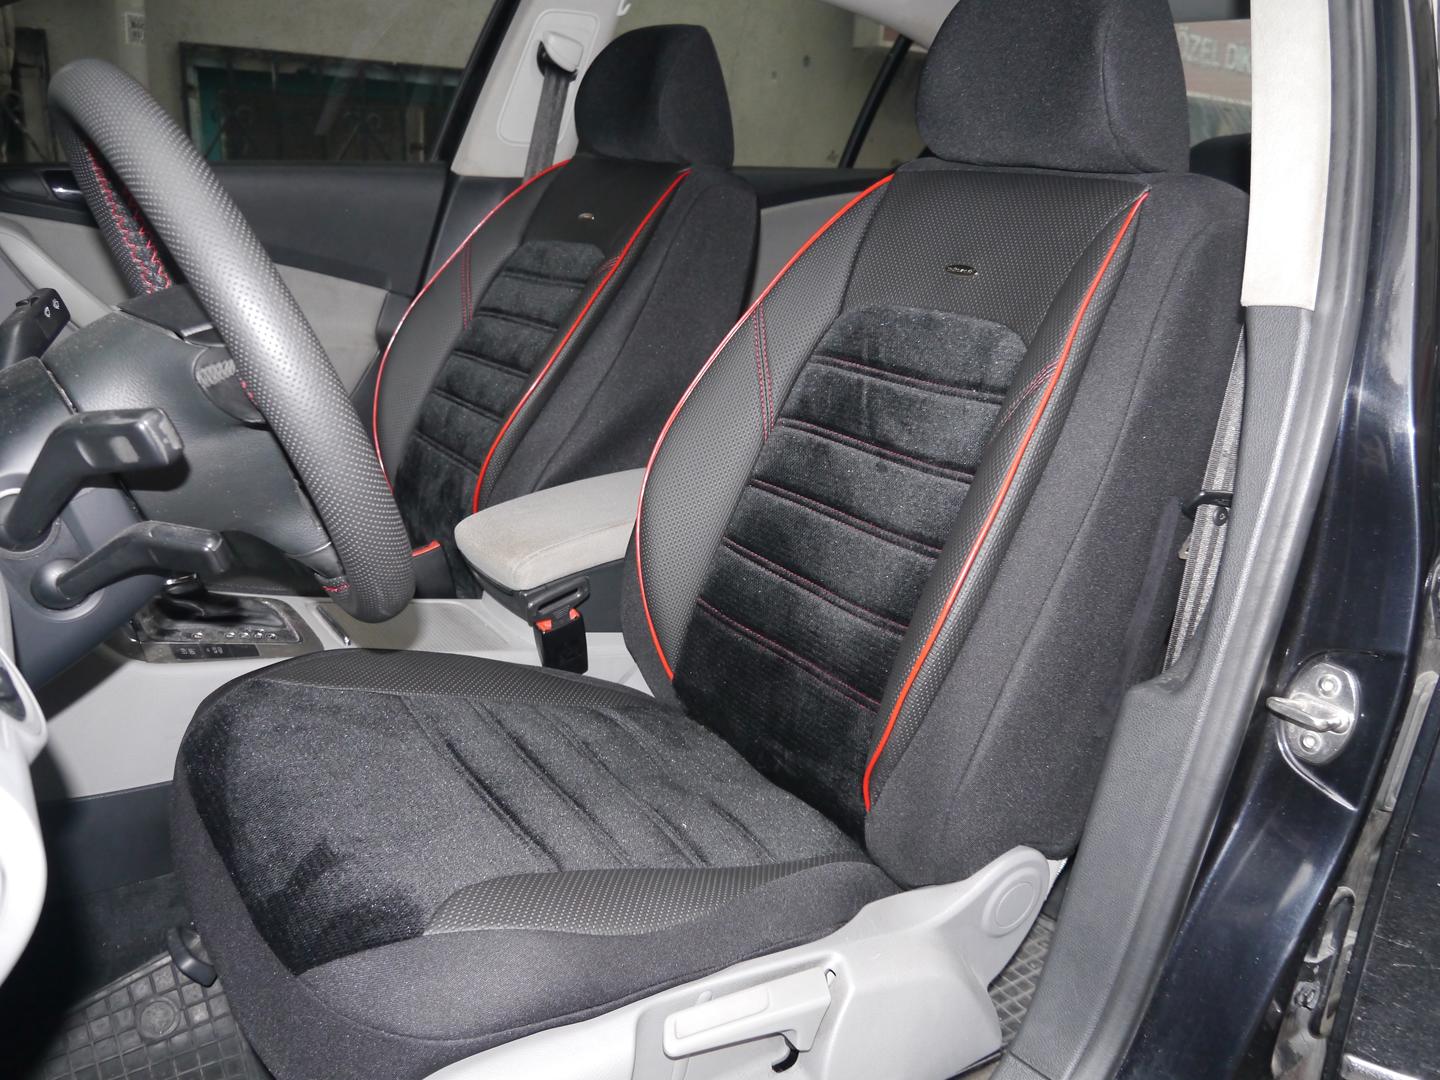 Yannaky Sitzbezügesets für V-W Golf 4 5 6 7 Mk4,Leder Schonbezüge sitzbezug  Sitzauflagen 5 Sitze Komplett-Set Airbag-kompatibel Autozubehör: :  Auto & Motorrad